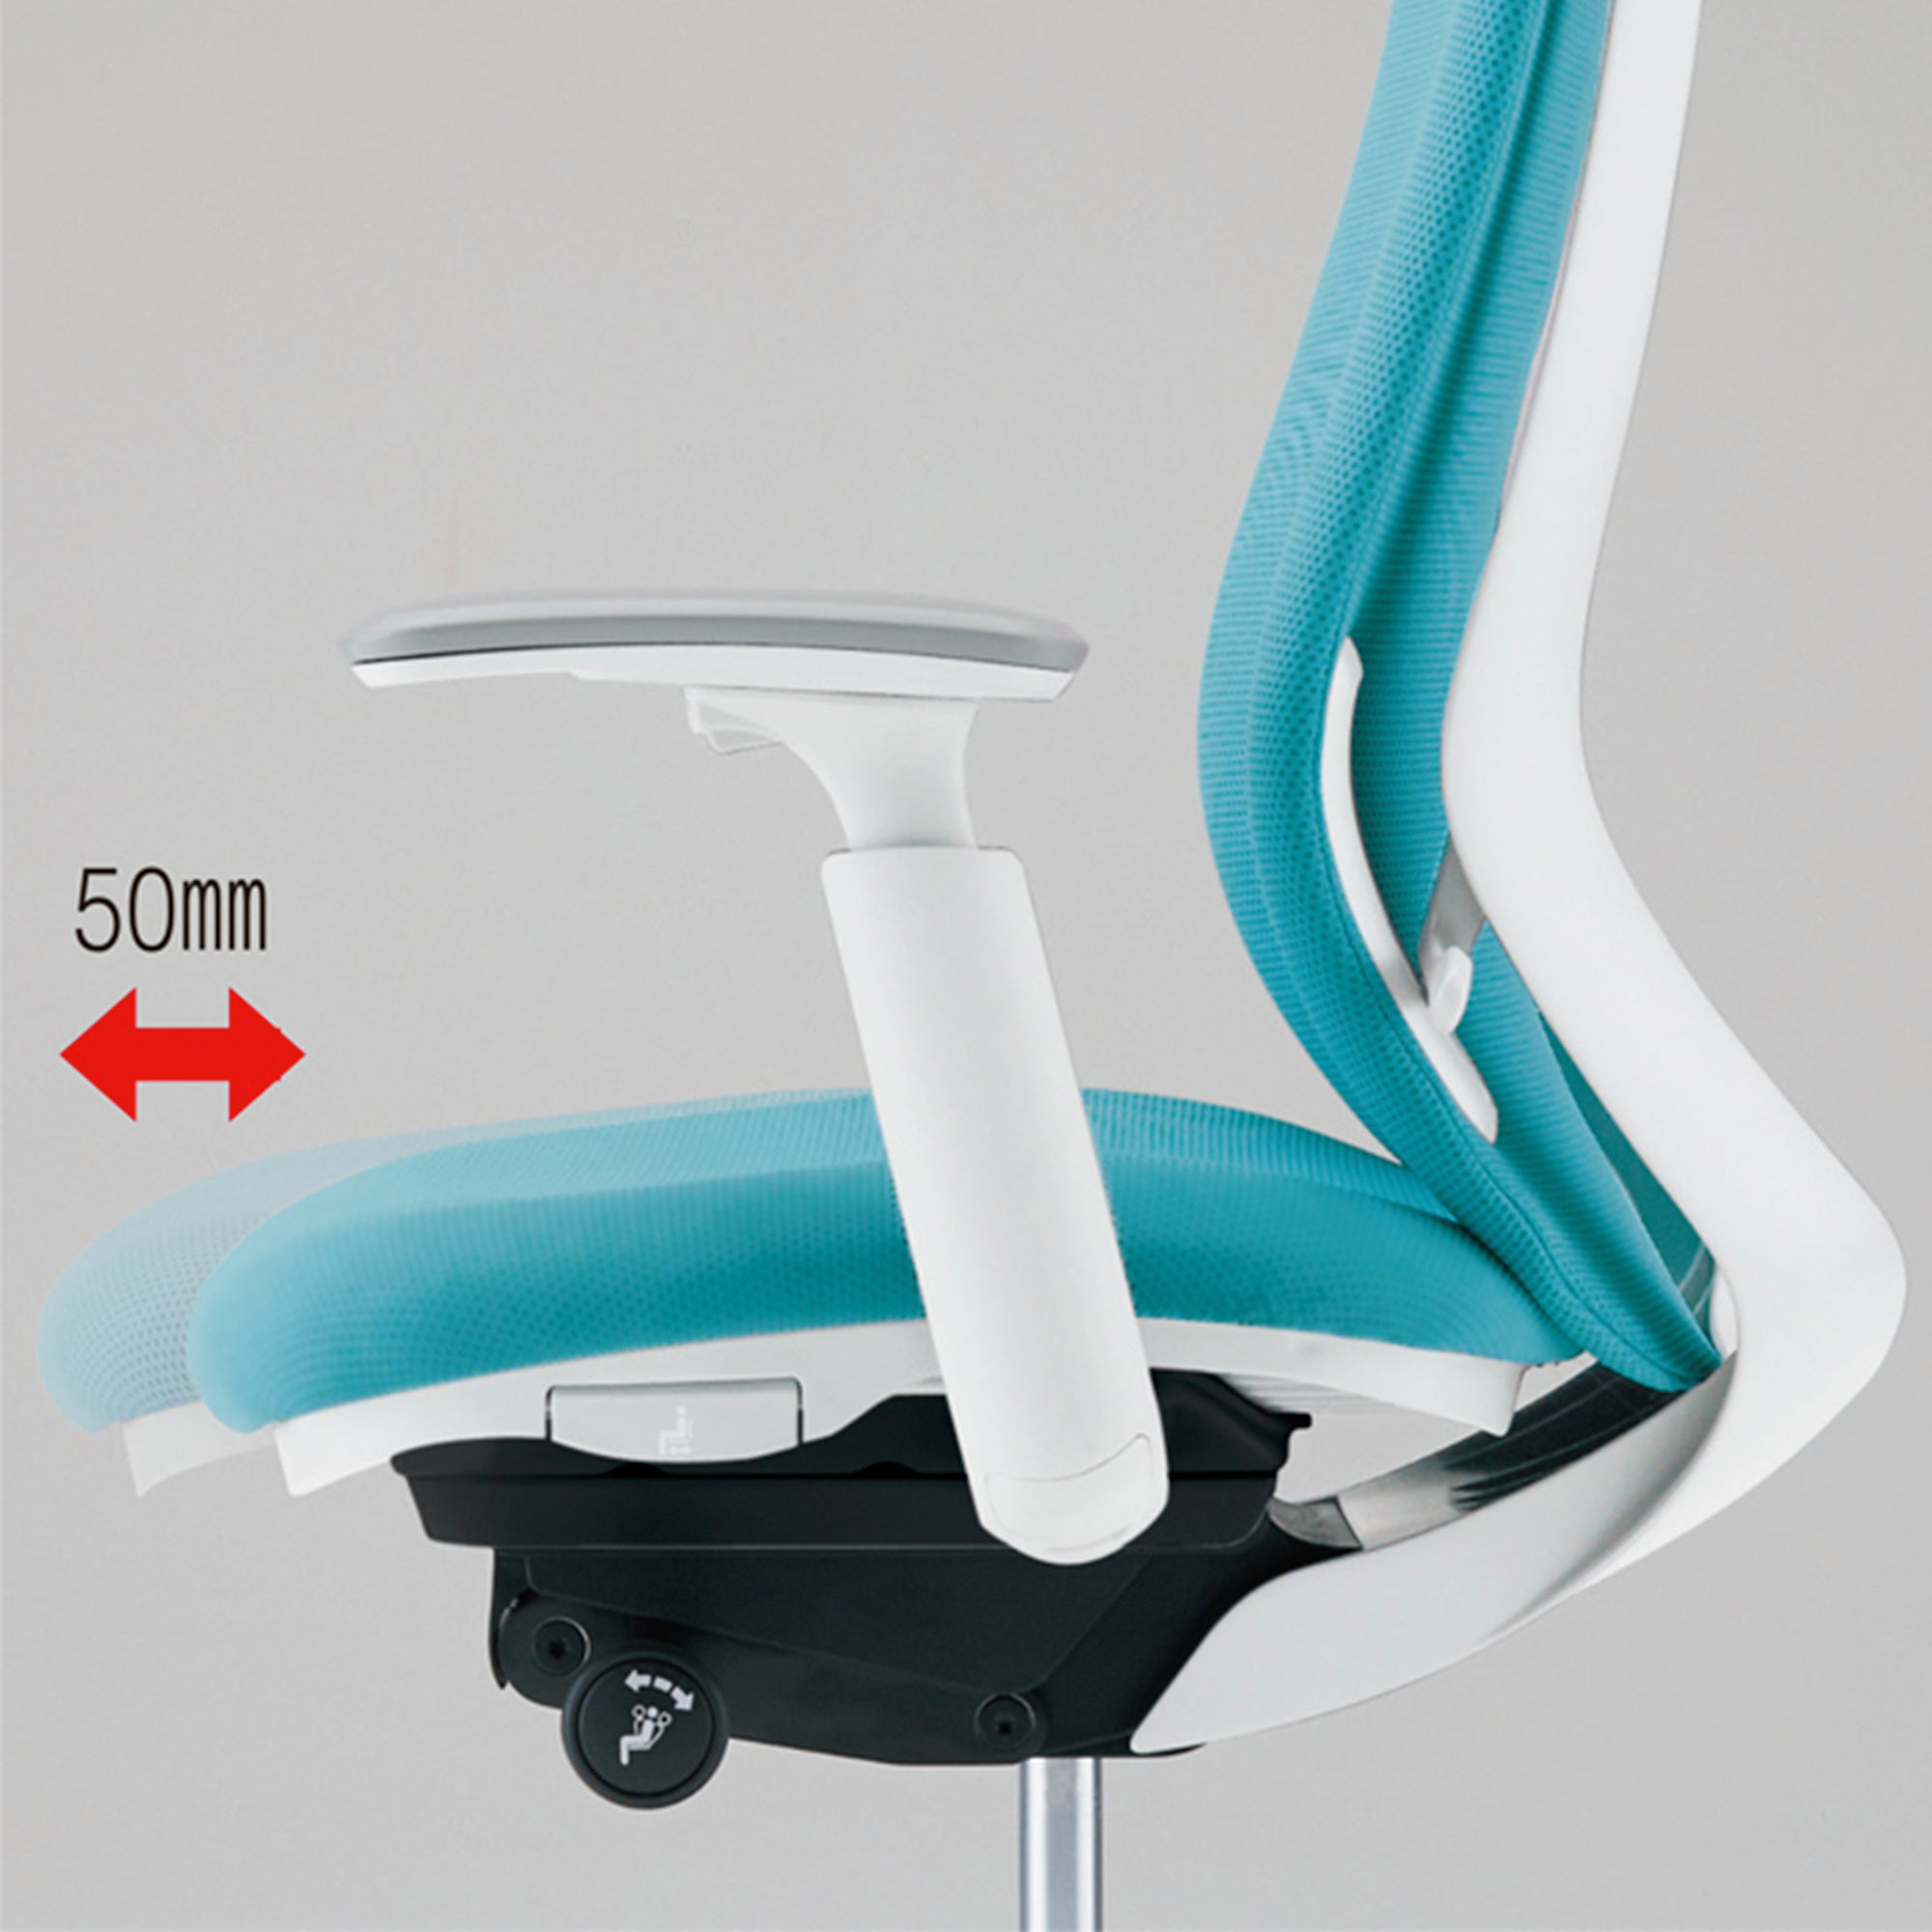 Adjustable seat depth ergonomic chair